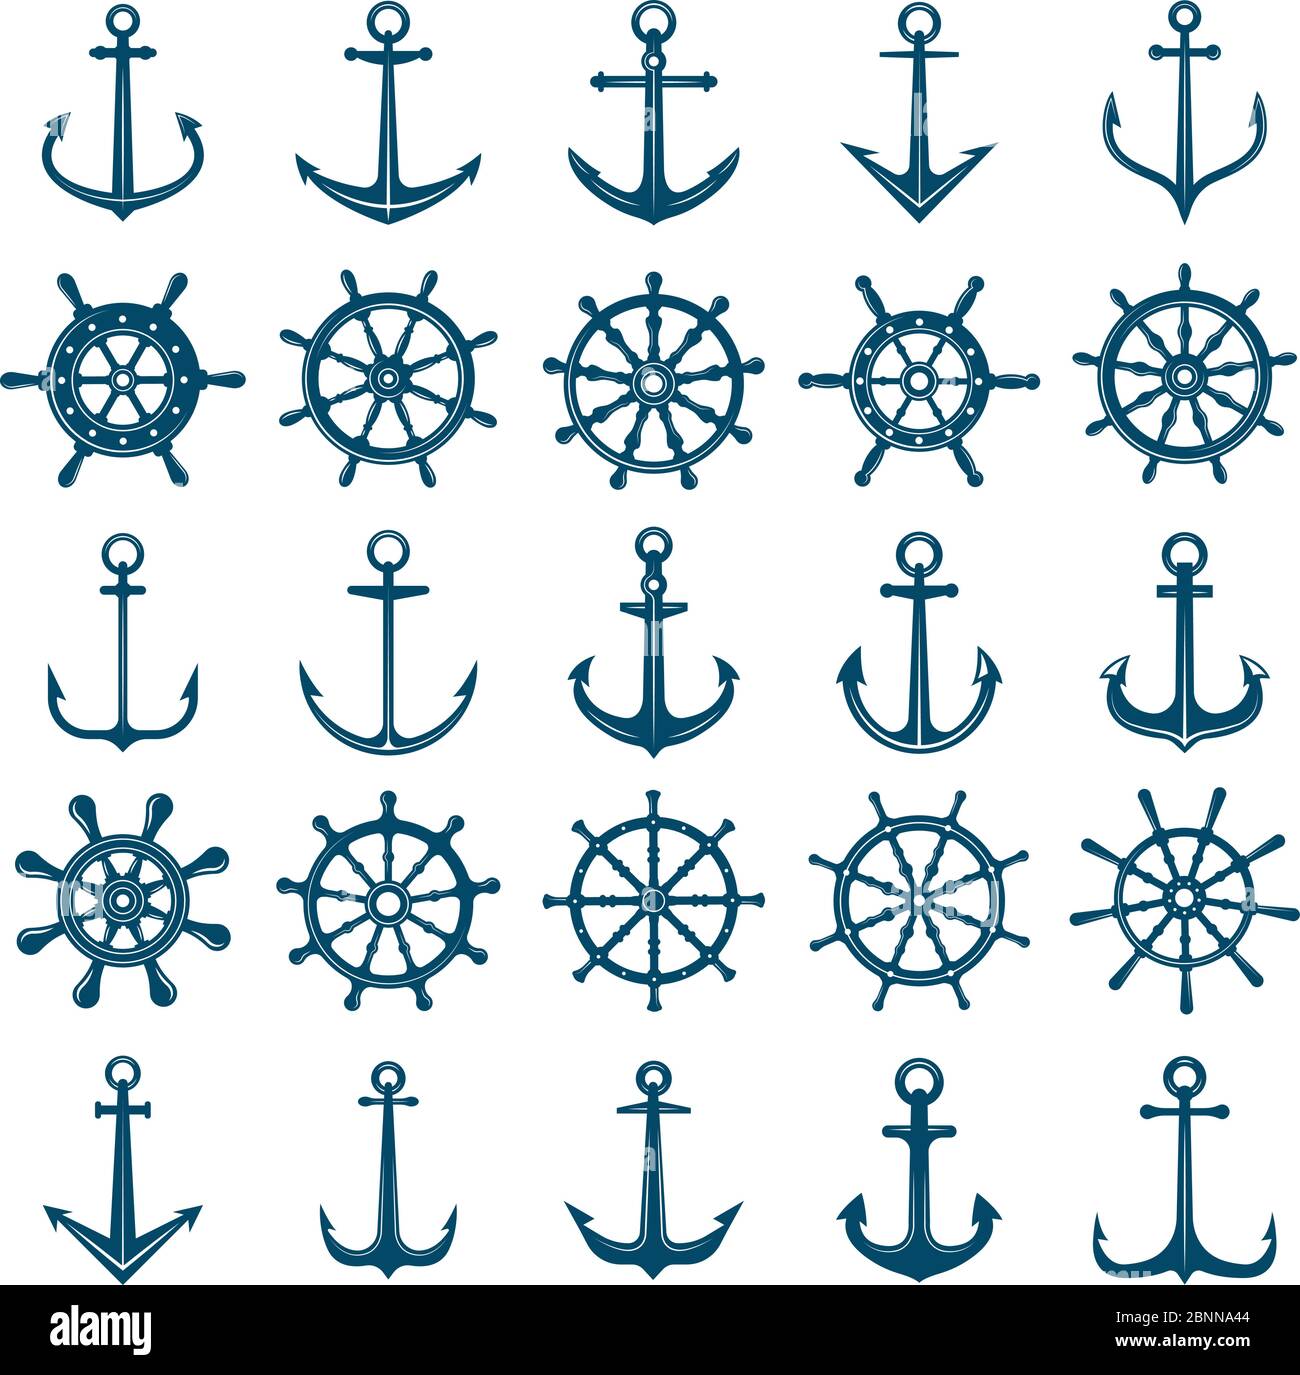 70 Ship Wheel Tattoo Designs For Men  A Meaningful Voyage  Wheel tattoo Ship  wheel tattoo Tattoo designs men